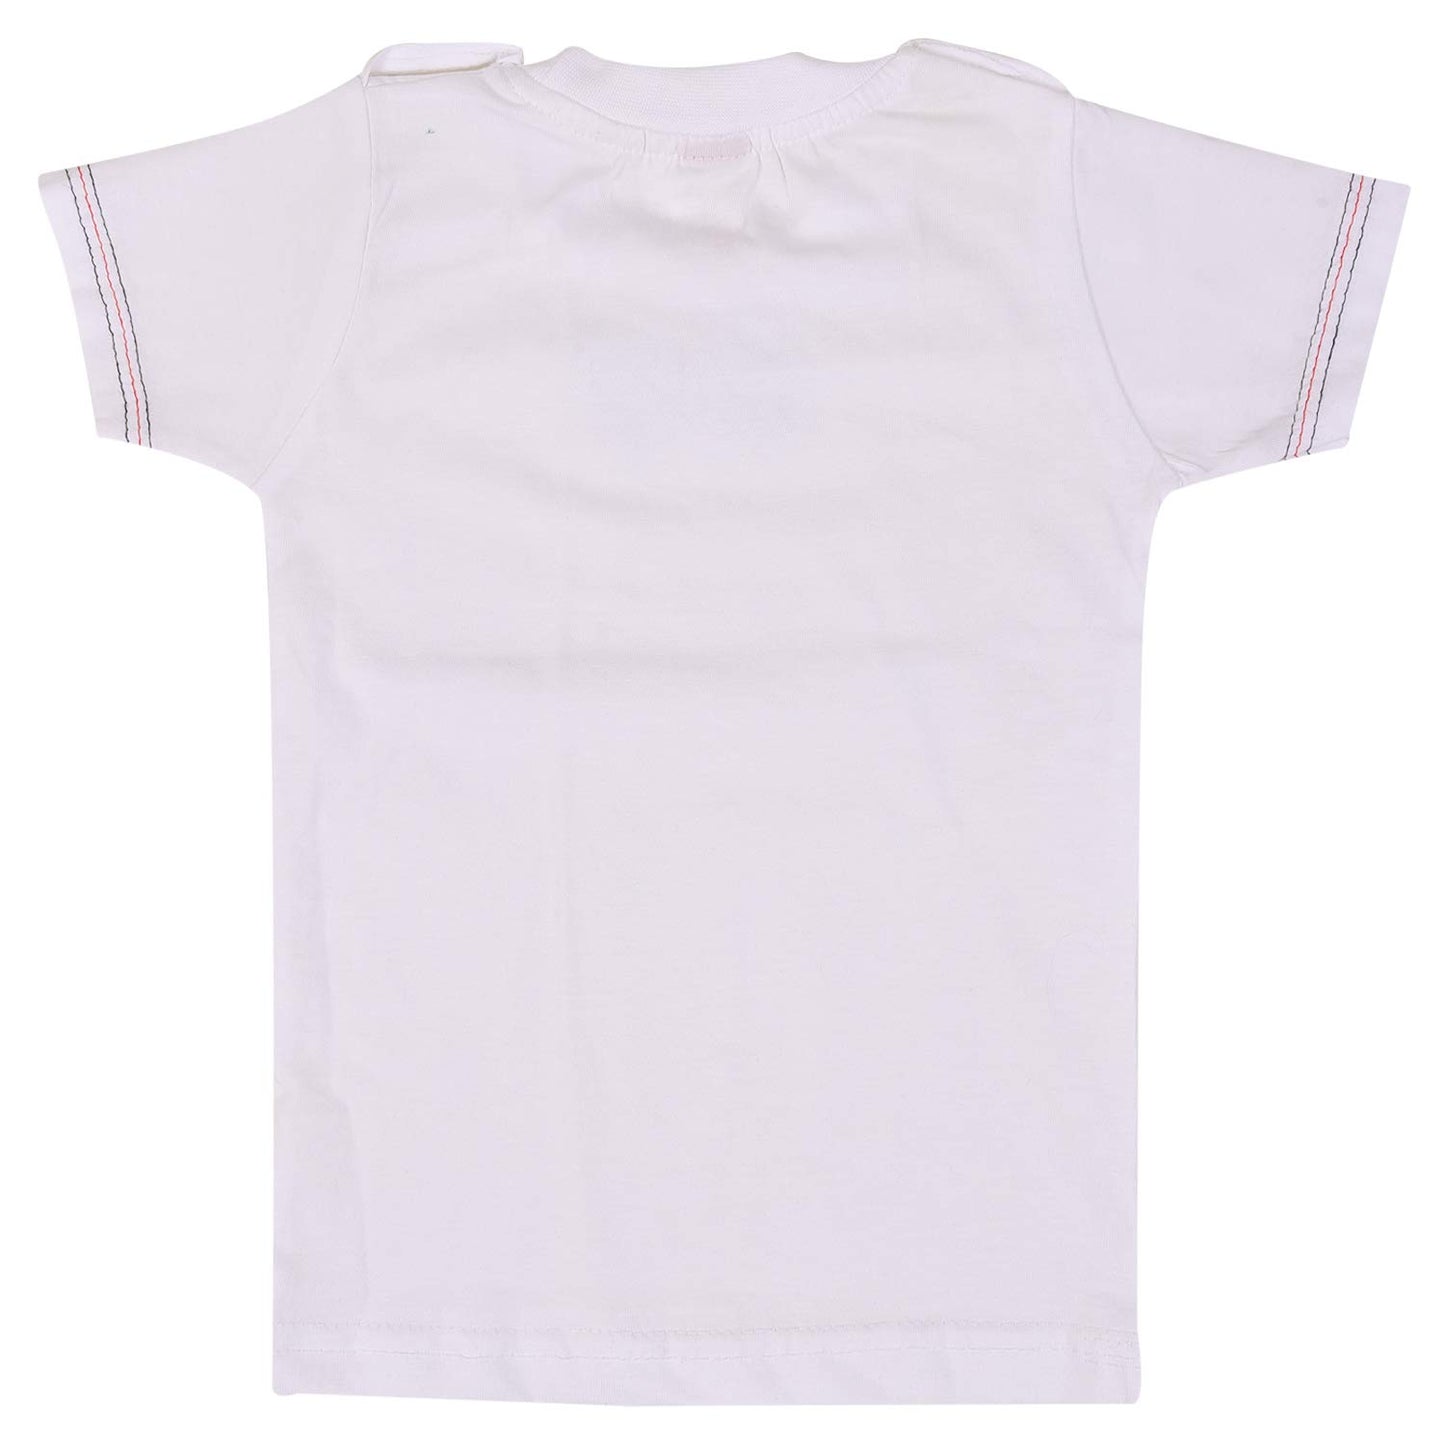 Wish Karo Unisex Clothing Sets for Boys & Baby Girls-(bt13rd)